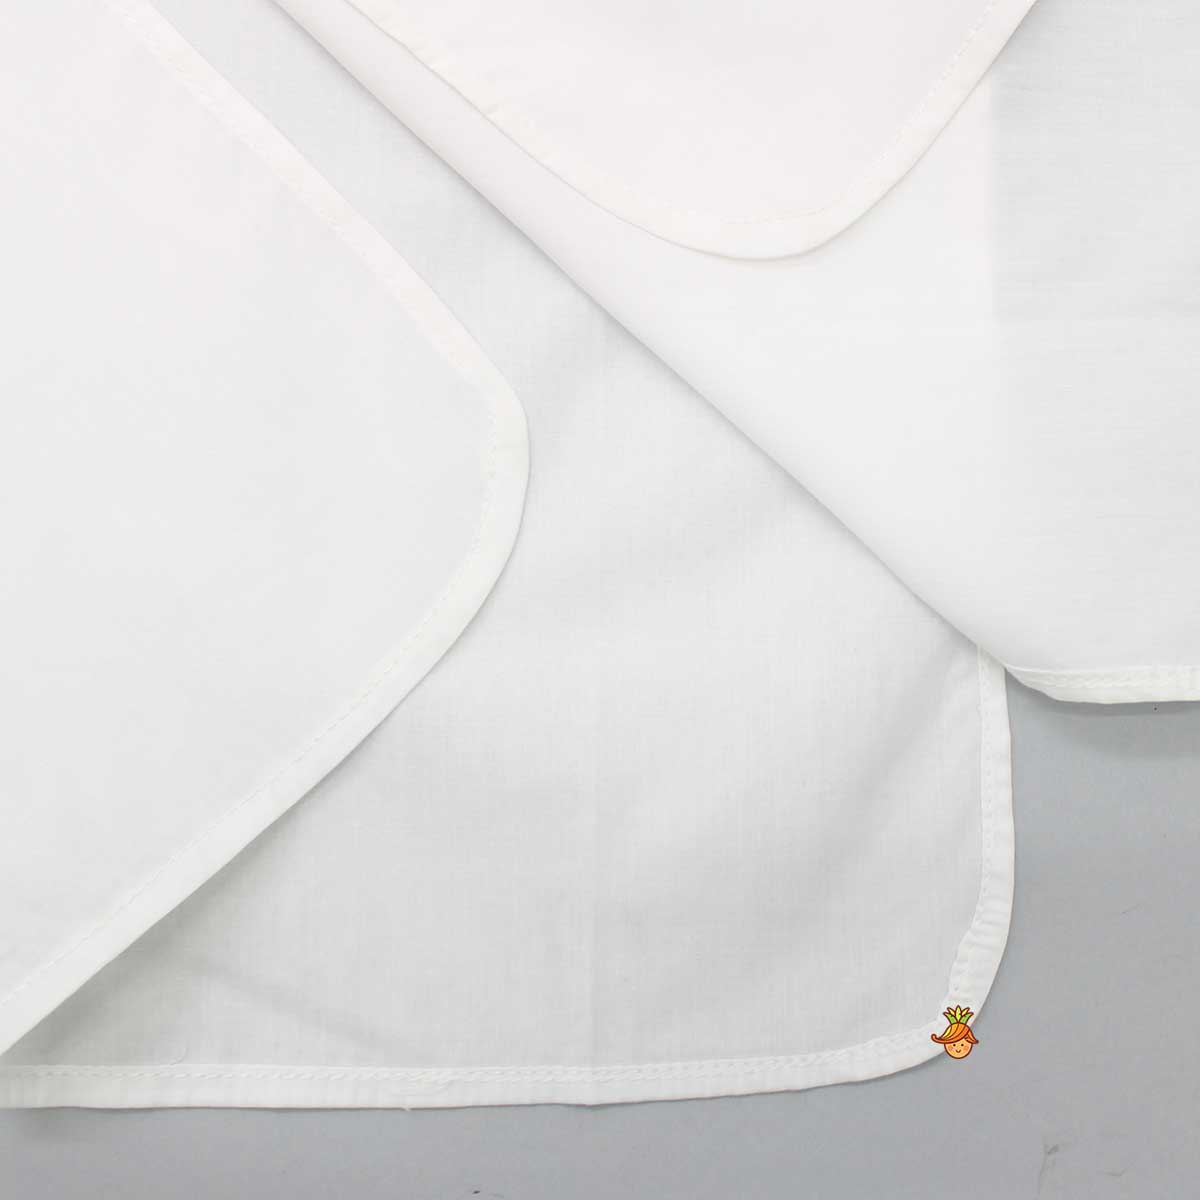 Contrasting Patch Pocket White Kurta And Pyjama